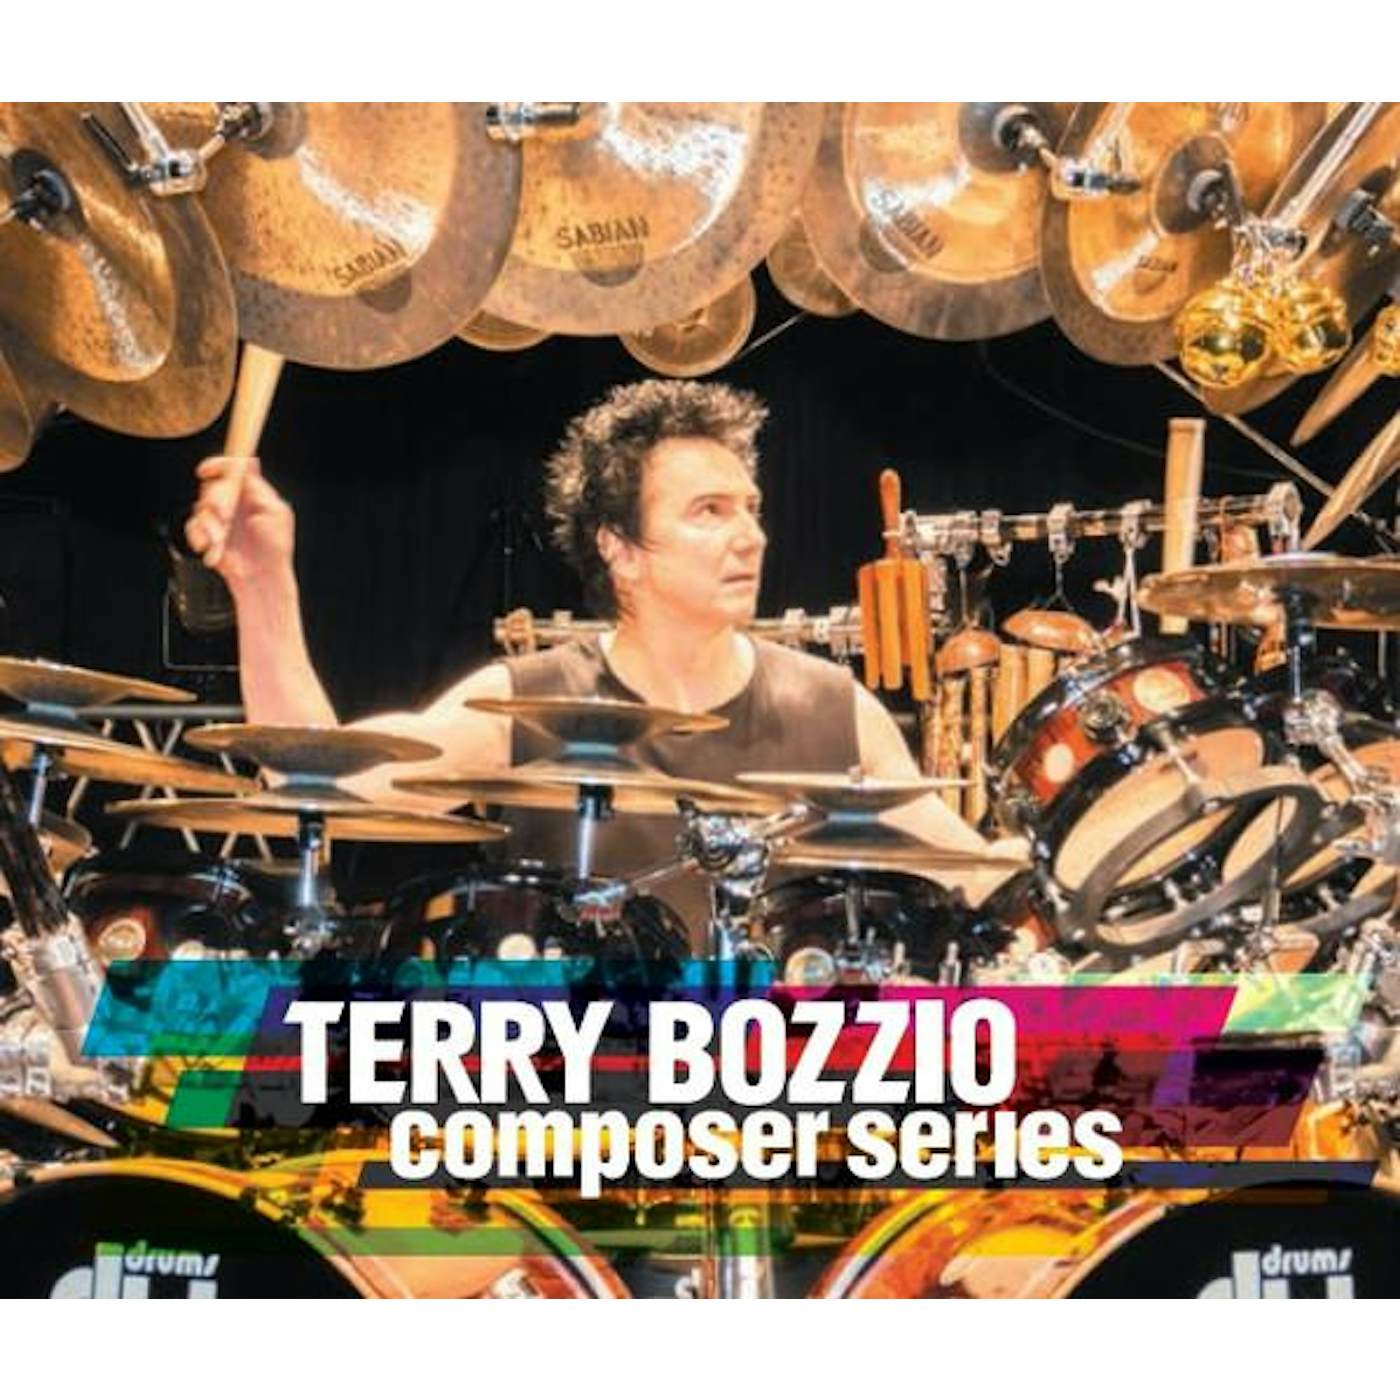 TERRY BOZZIO CD